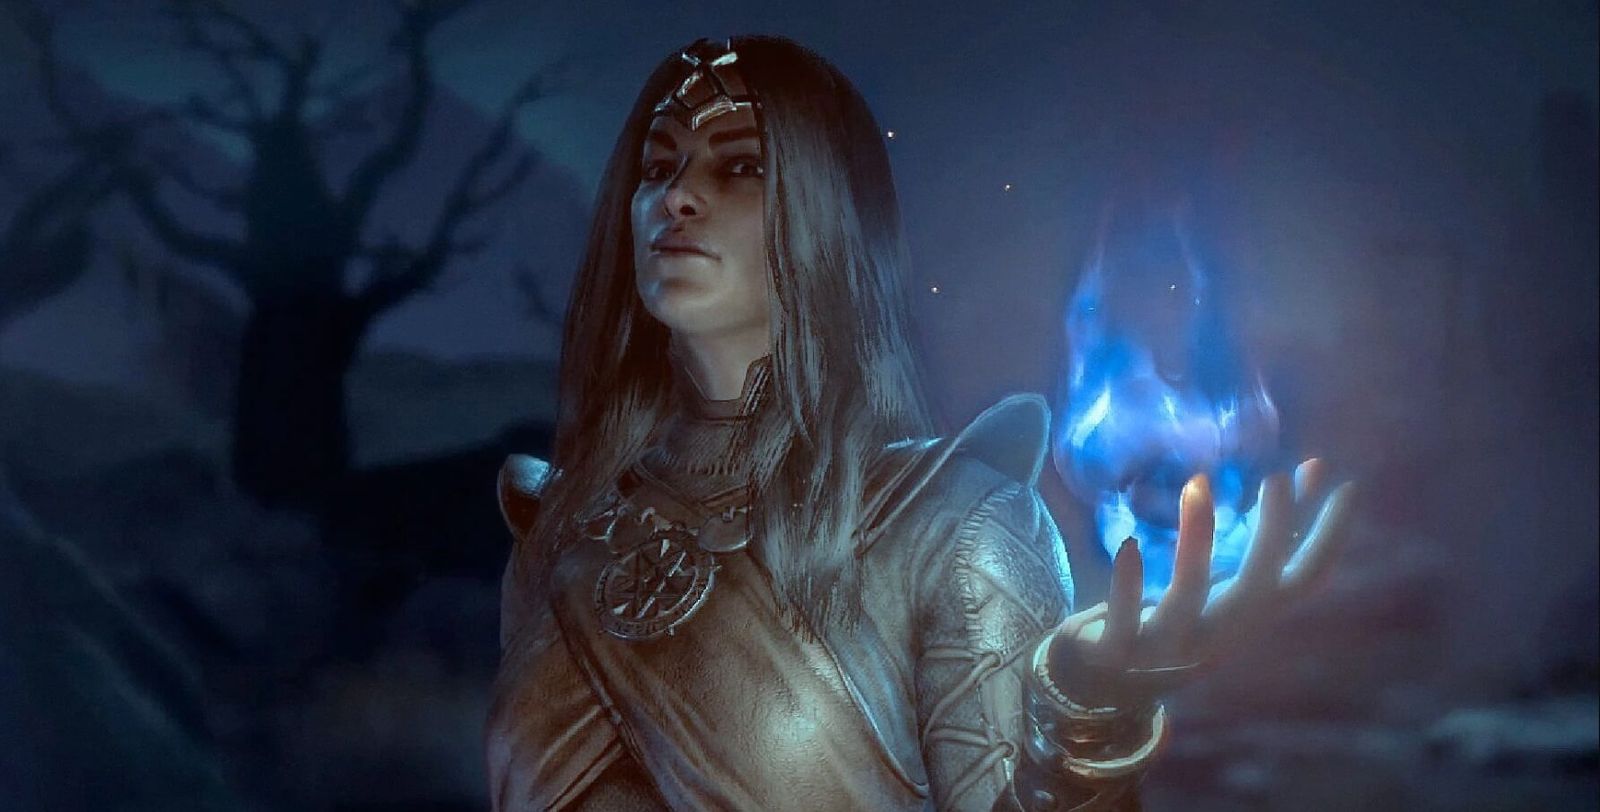 Diablo 4 Sorcerer summoning a blue ball in hand